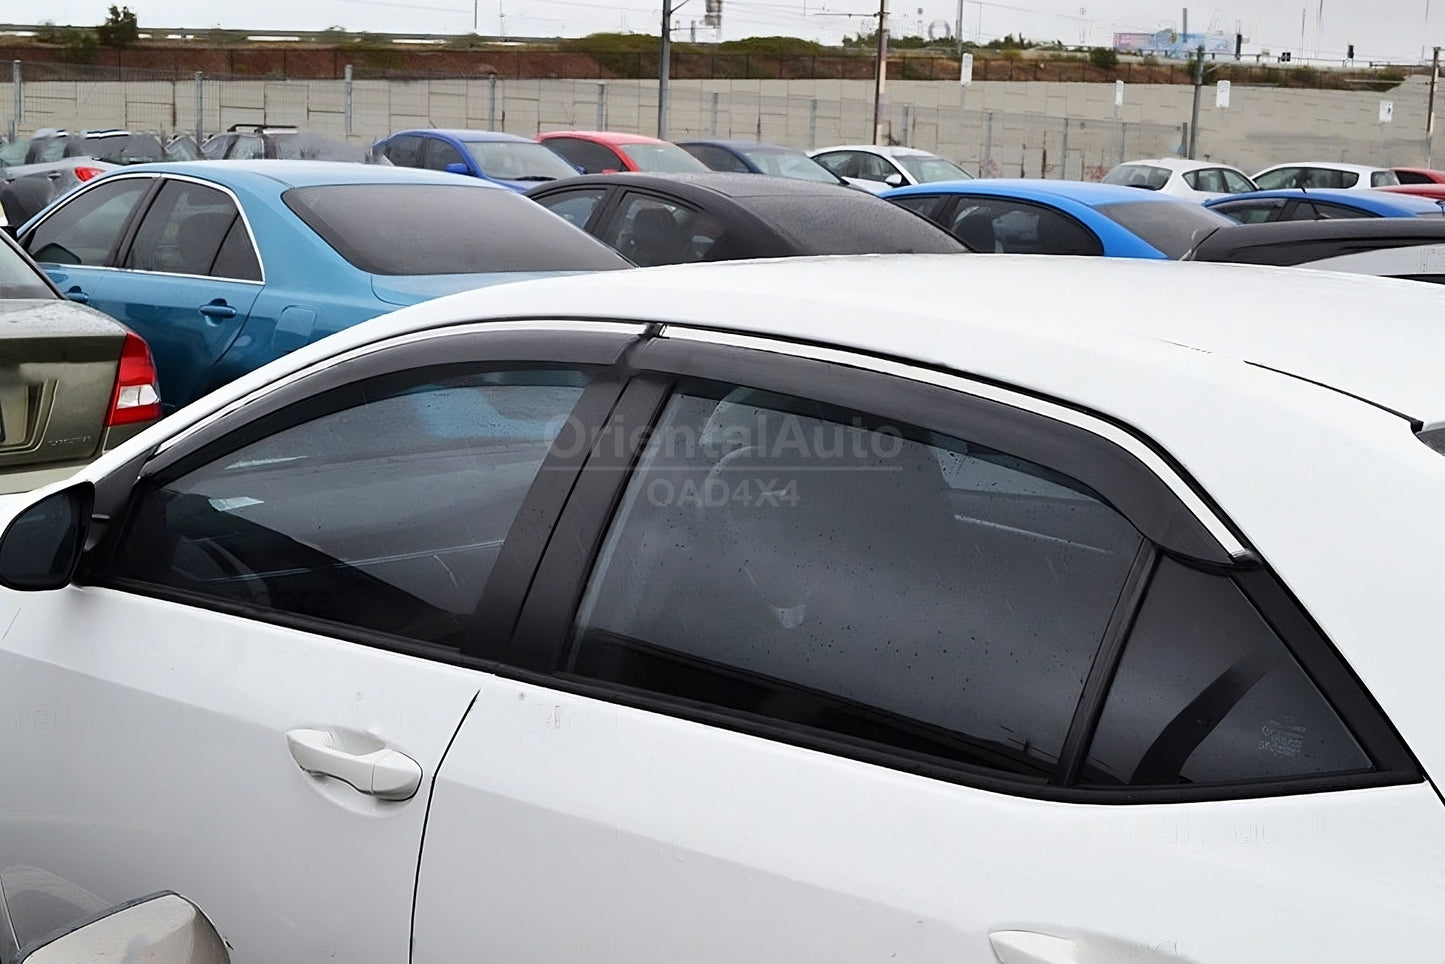 Injection Stainless Weathershields Weather Shields Window Visor For Toyota Corolla Sedan 2013-2019